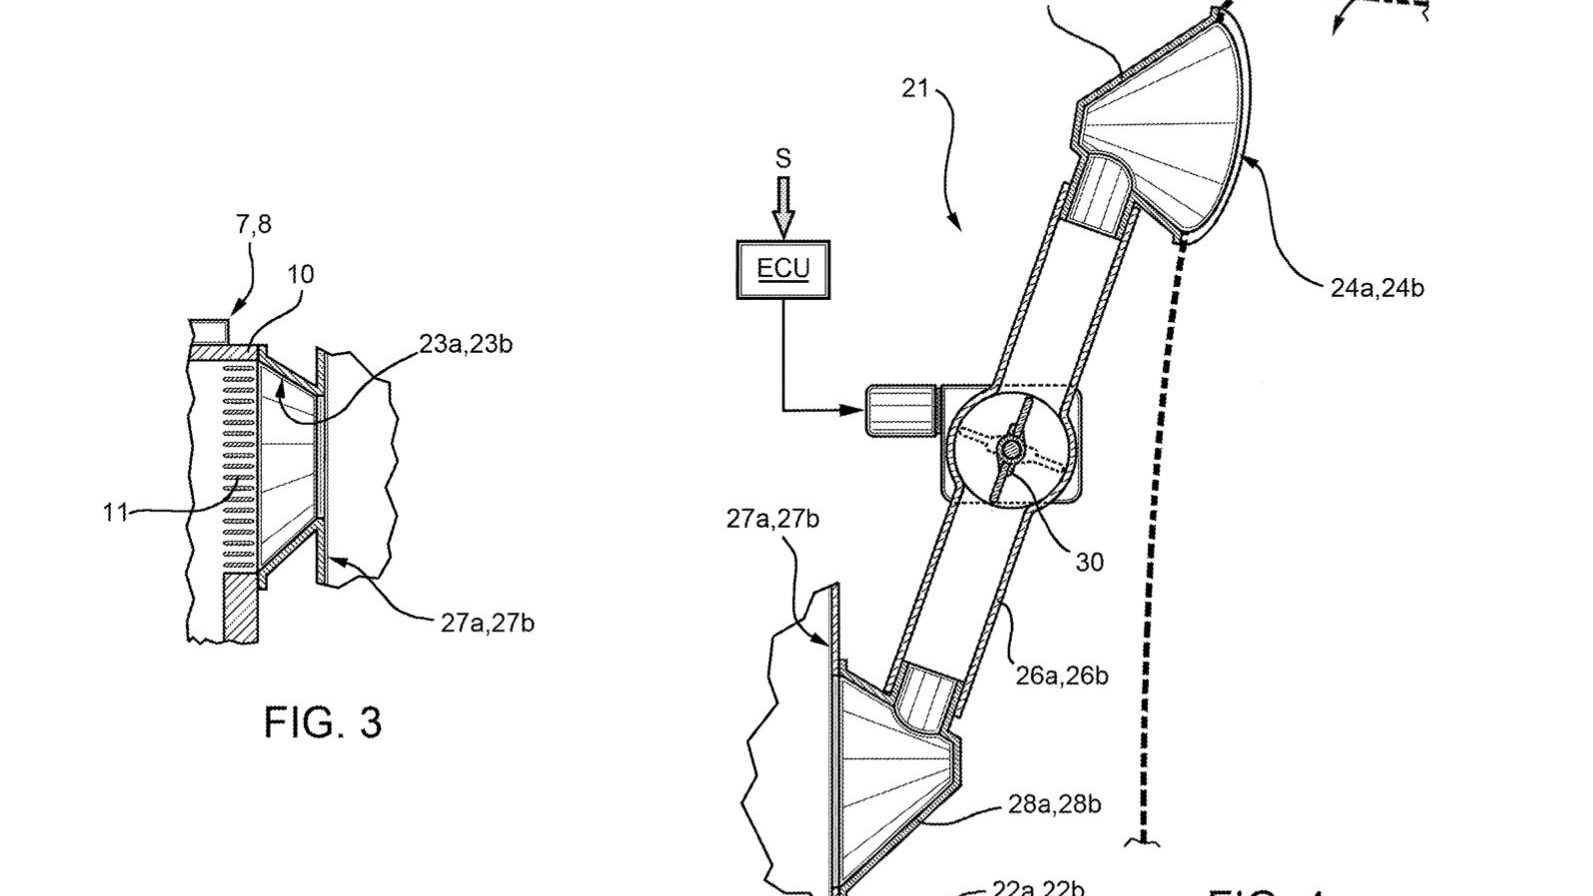 Patent image for Ferrari tri-motor EV with sound generators